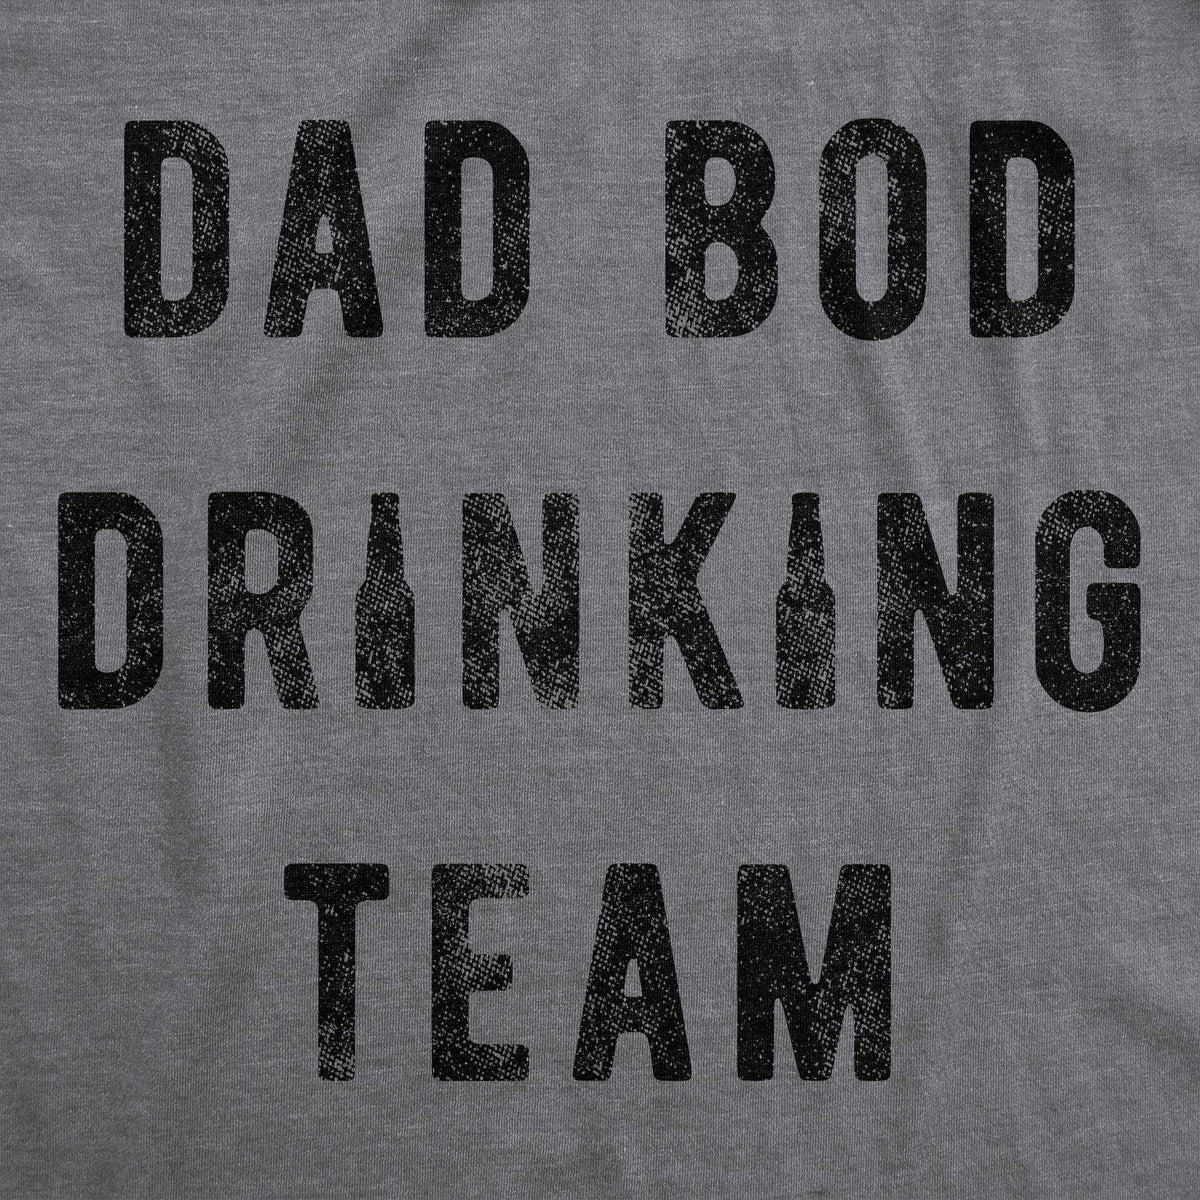 Dad Bod Drinking Team Men&#39;s Tshirt - Crazy Dog T-Shirts